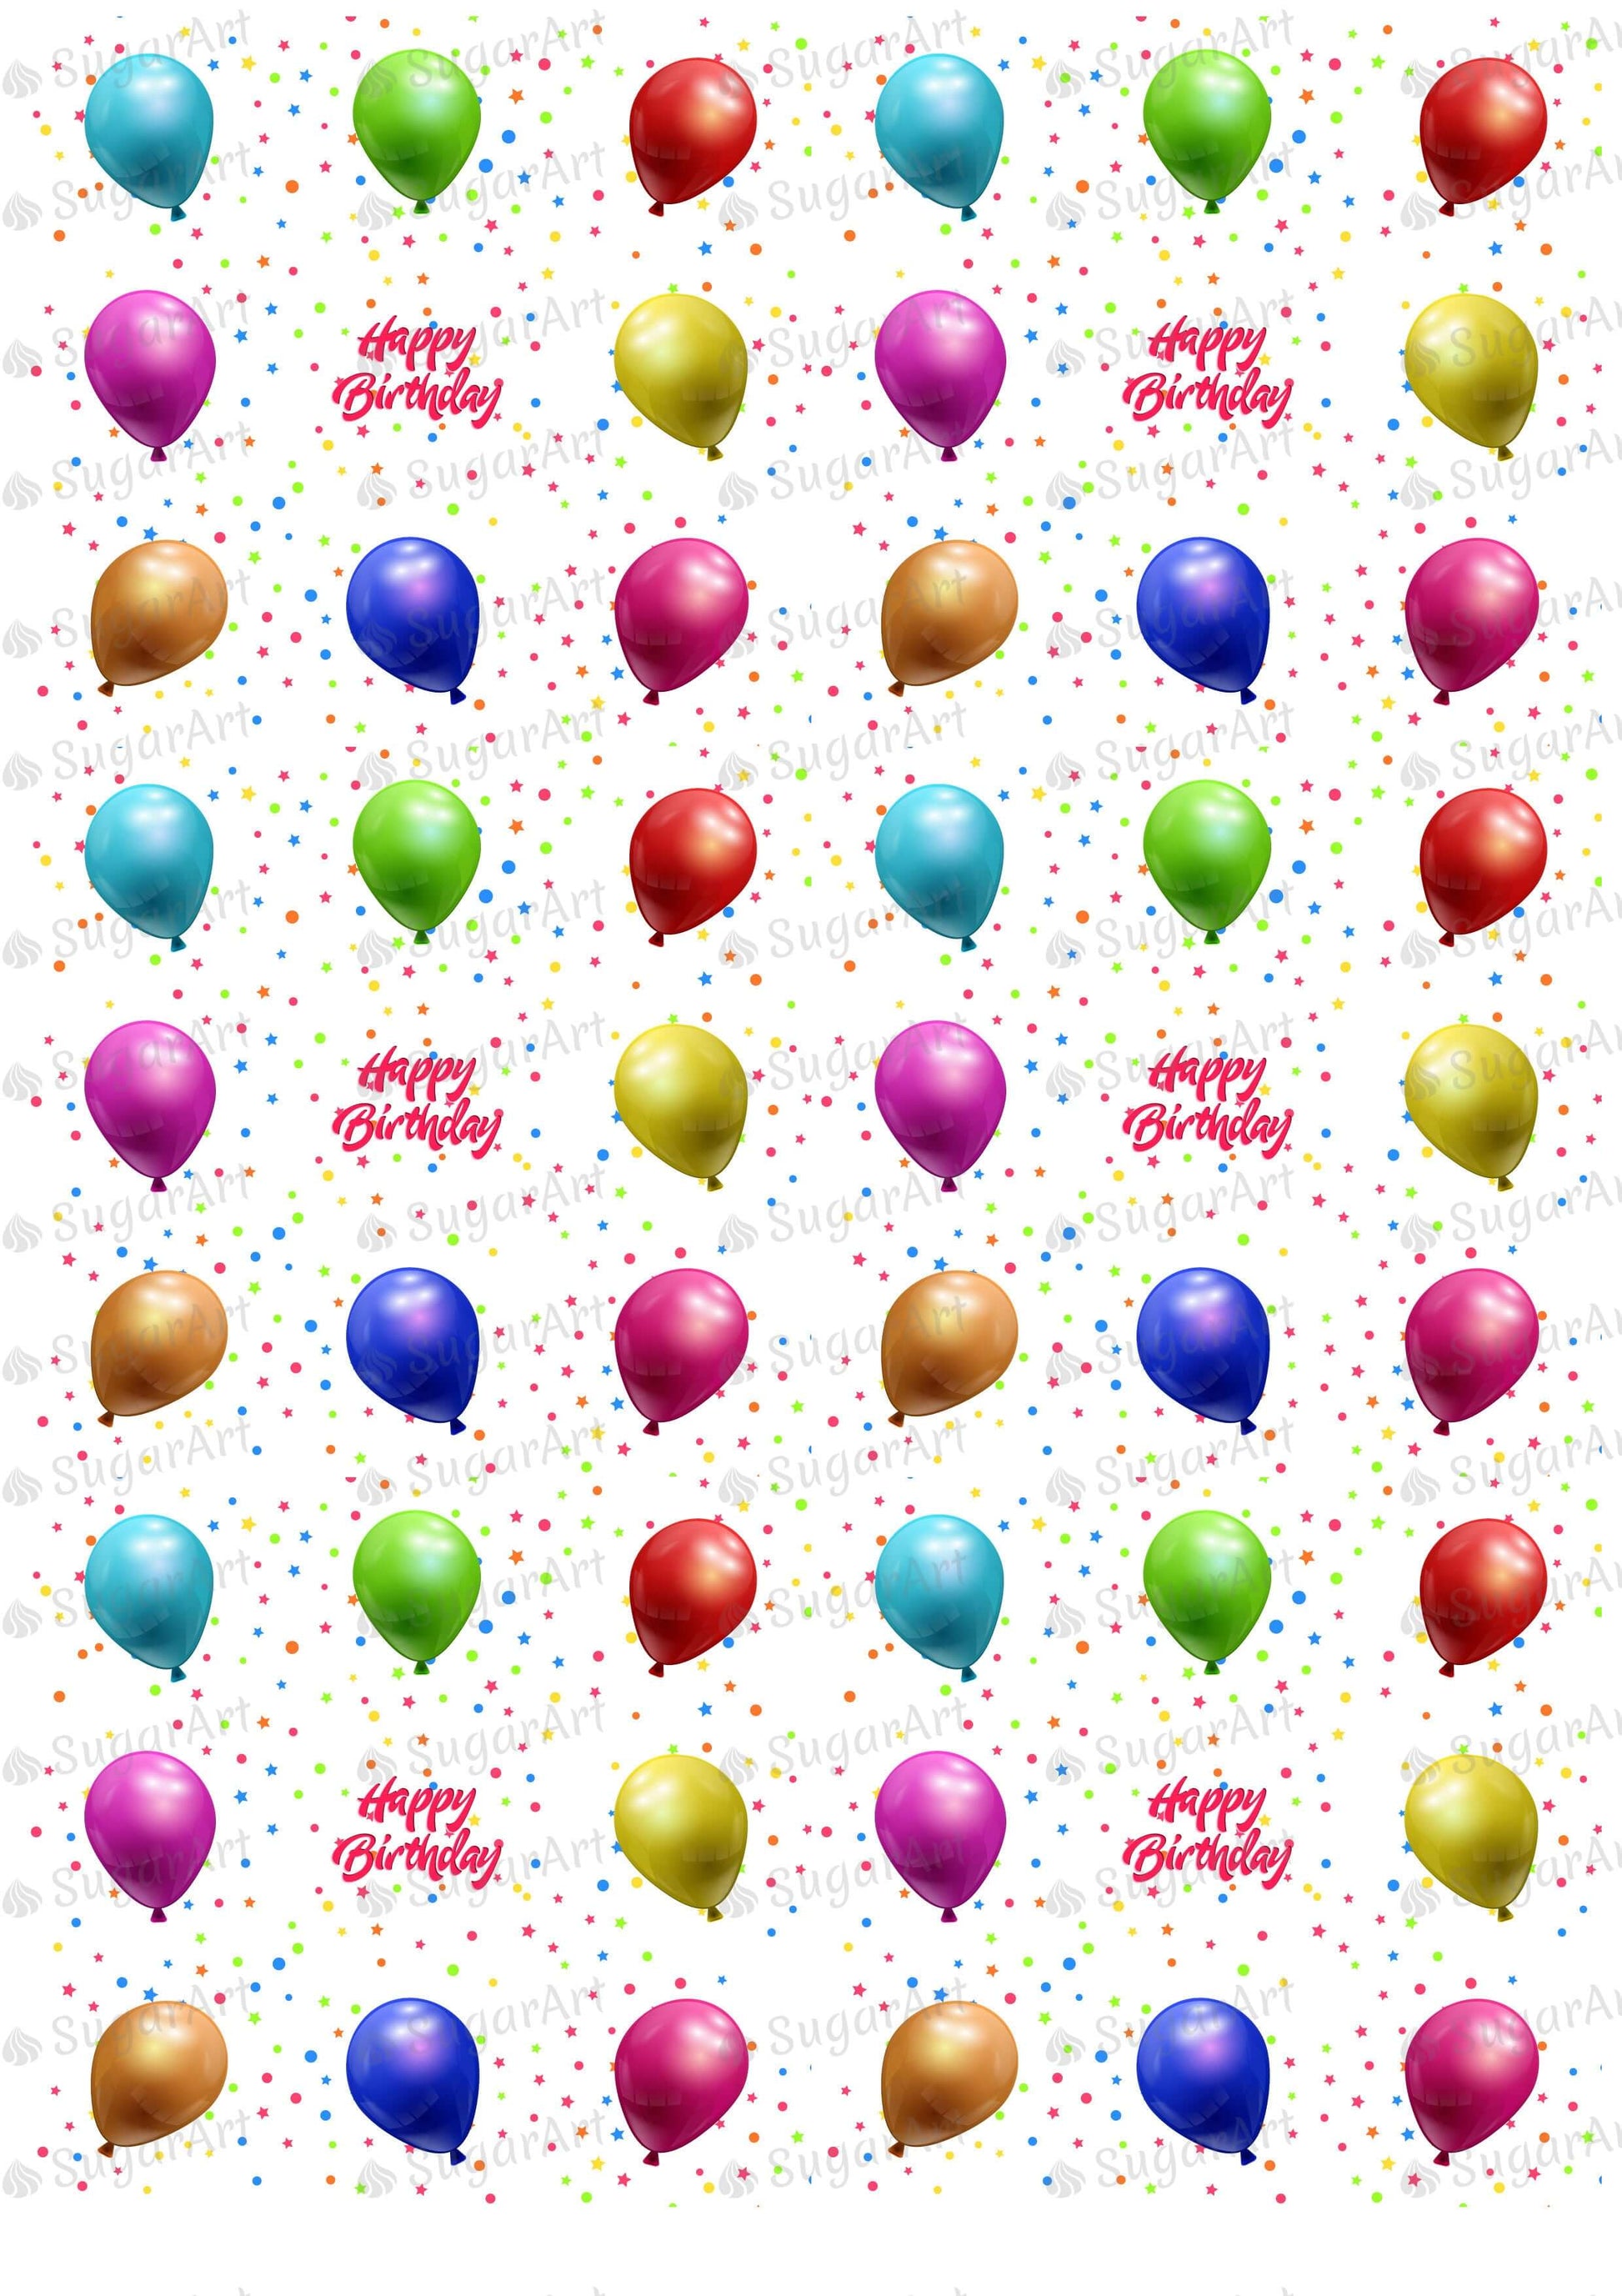 Happy Birthday With Colored Balloons - HSA030-Sugar Stamp sheets-Sugar Art